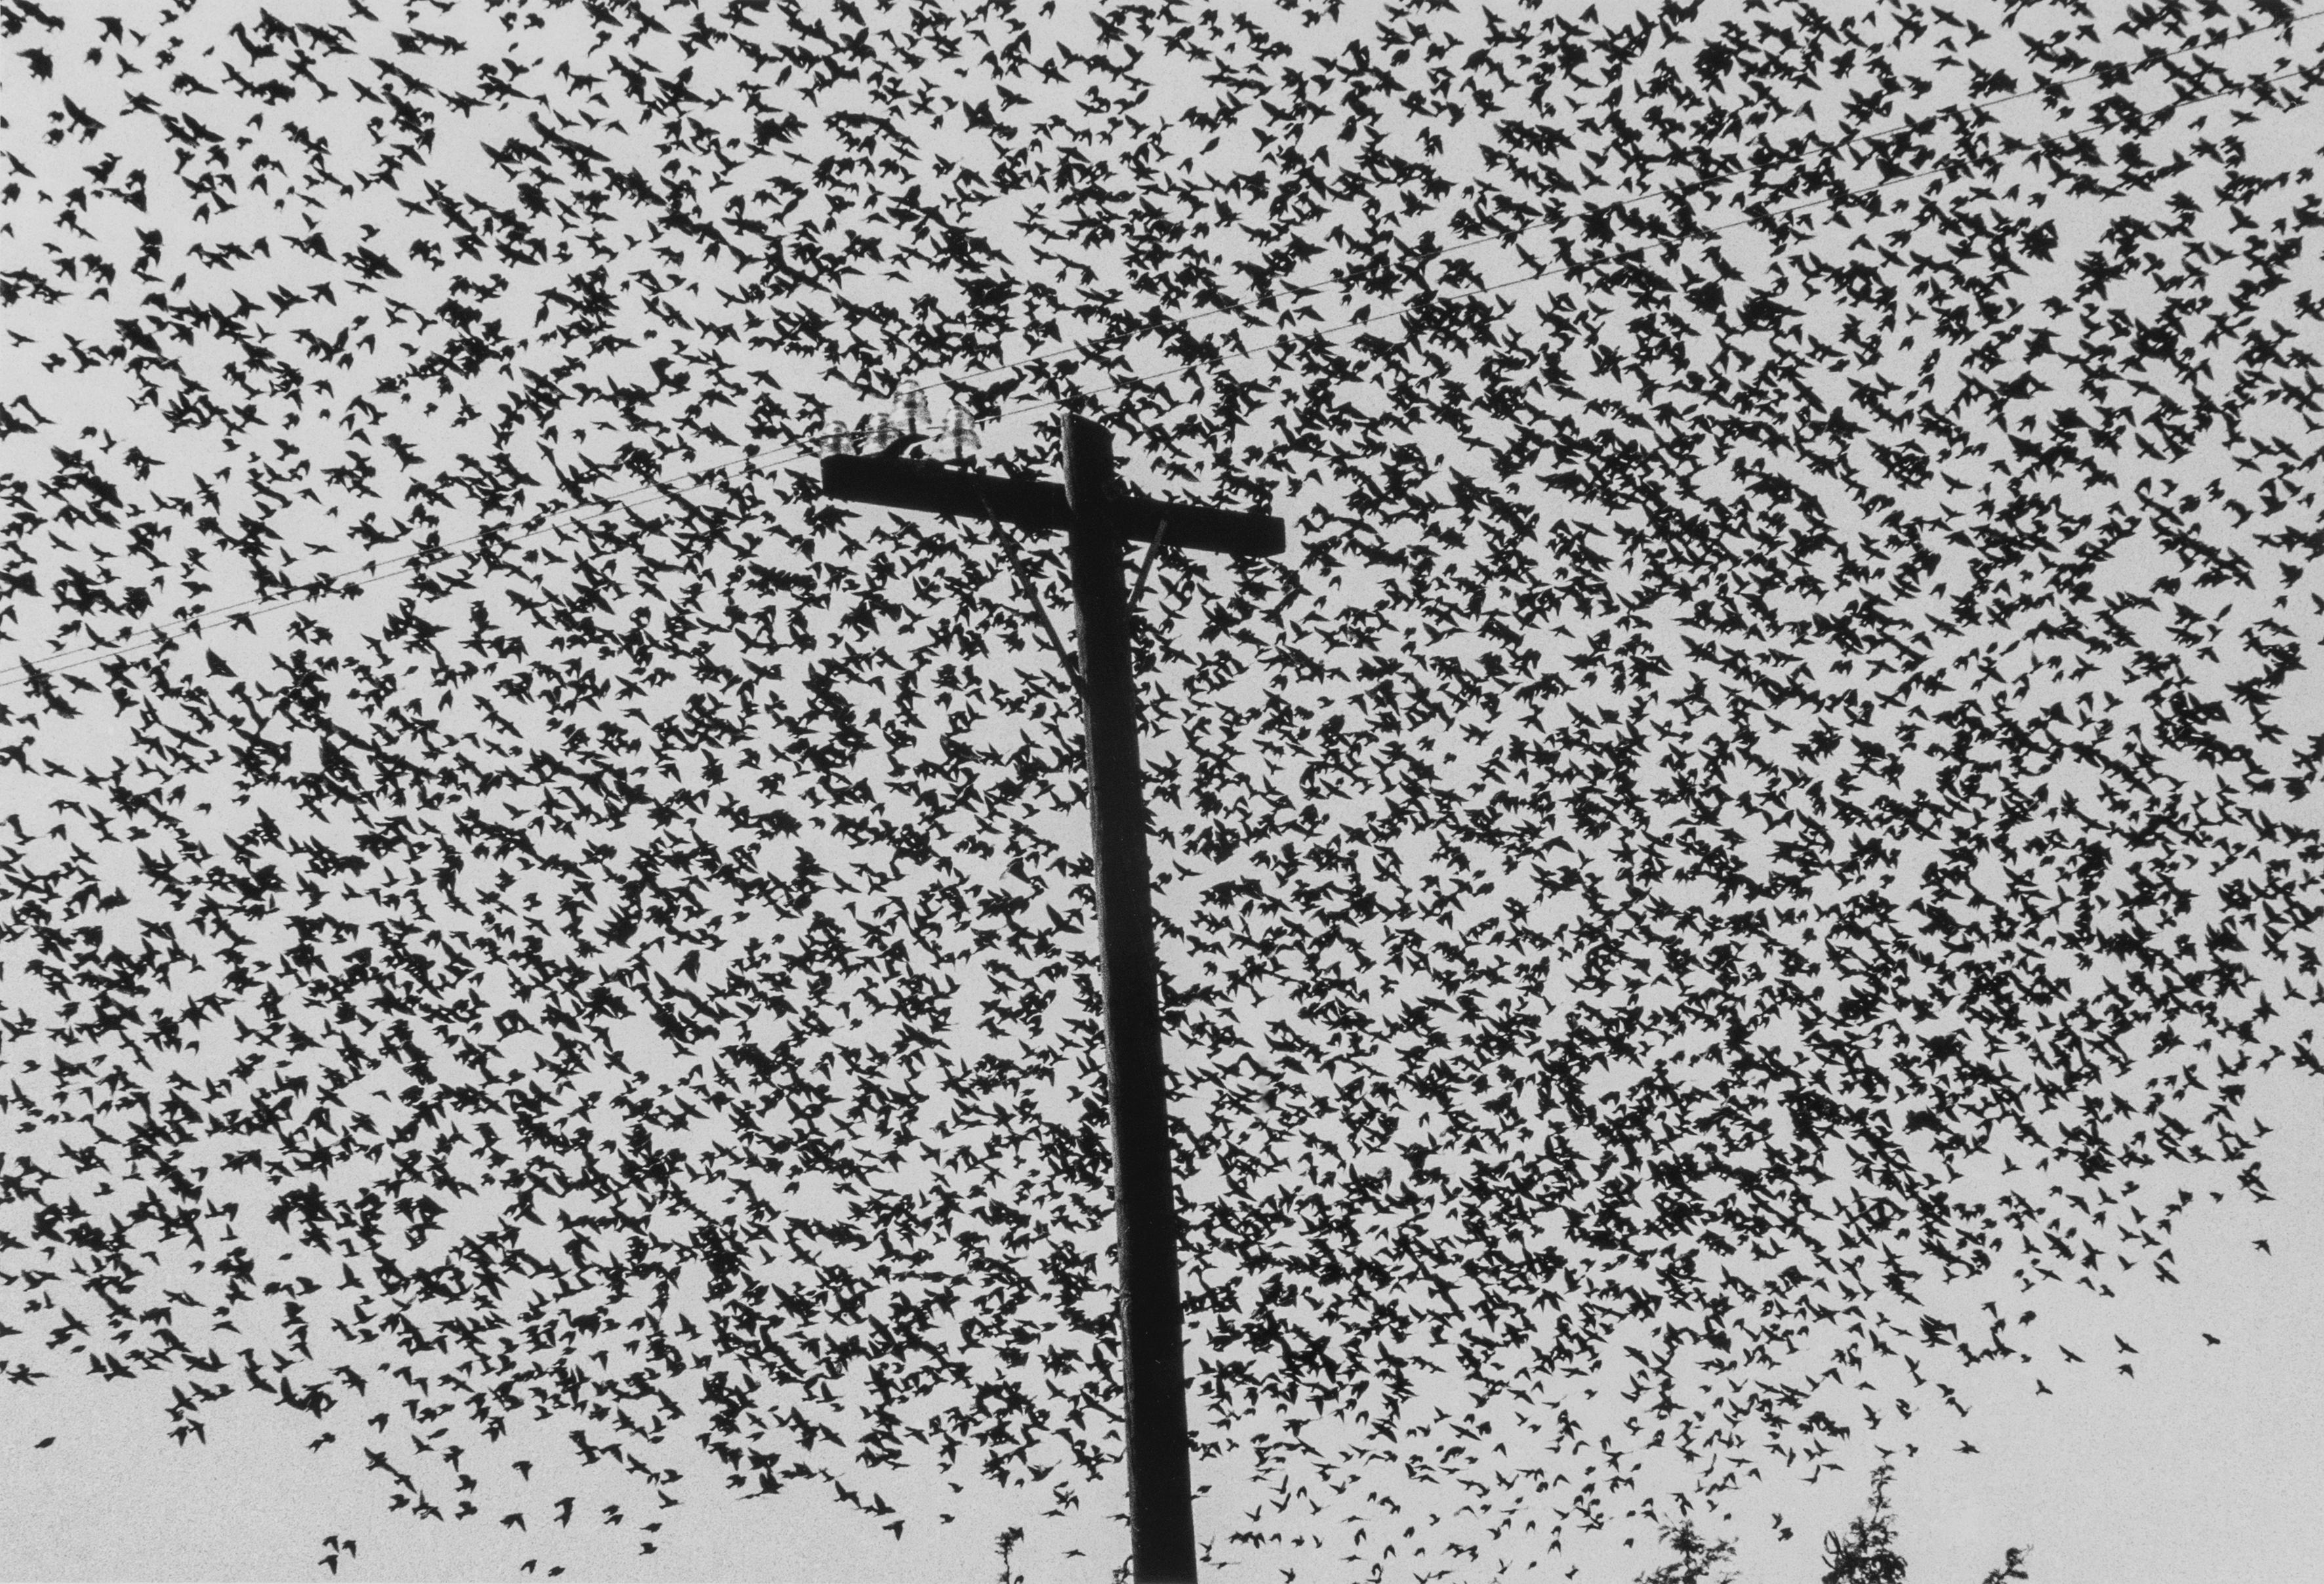 Graciela Iturbide Black and White Photograph - Pájaros en el Poste, Carretera [Birds on the Post, Highway], Guanajuato, 1990